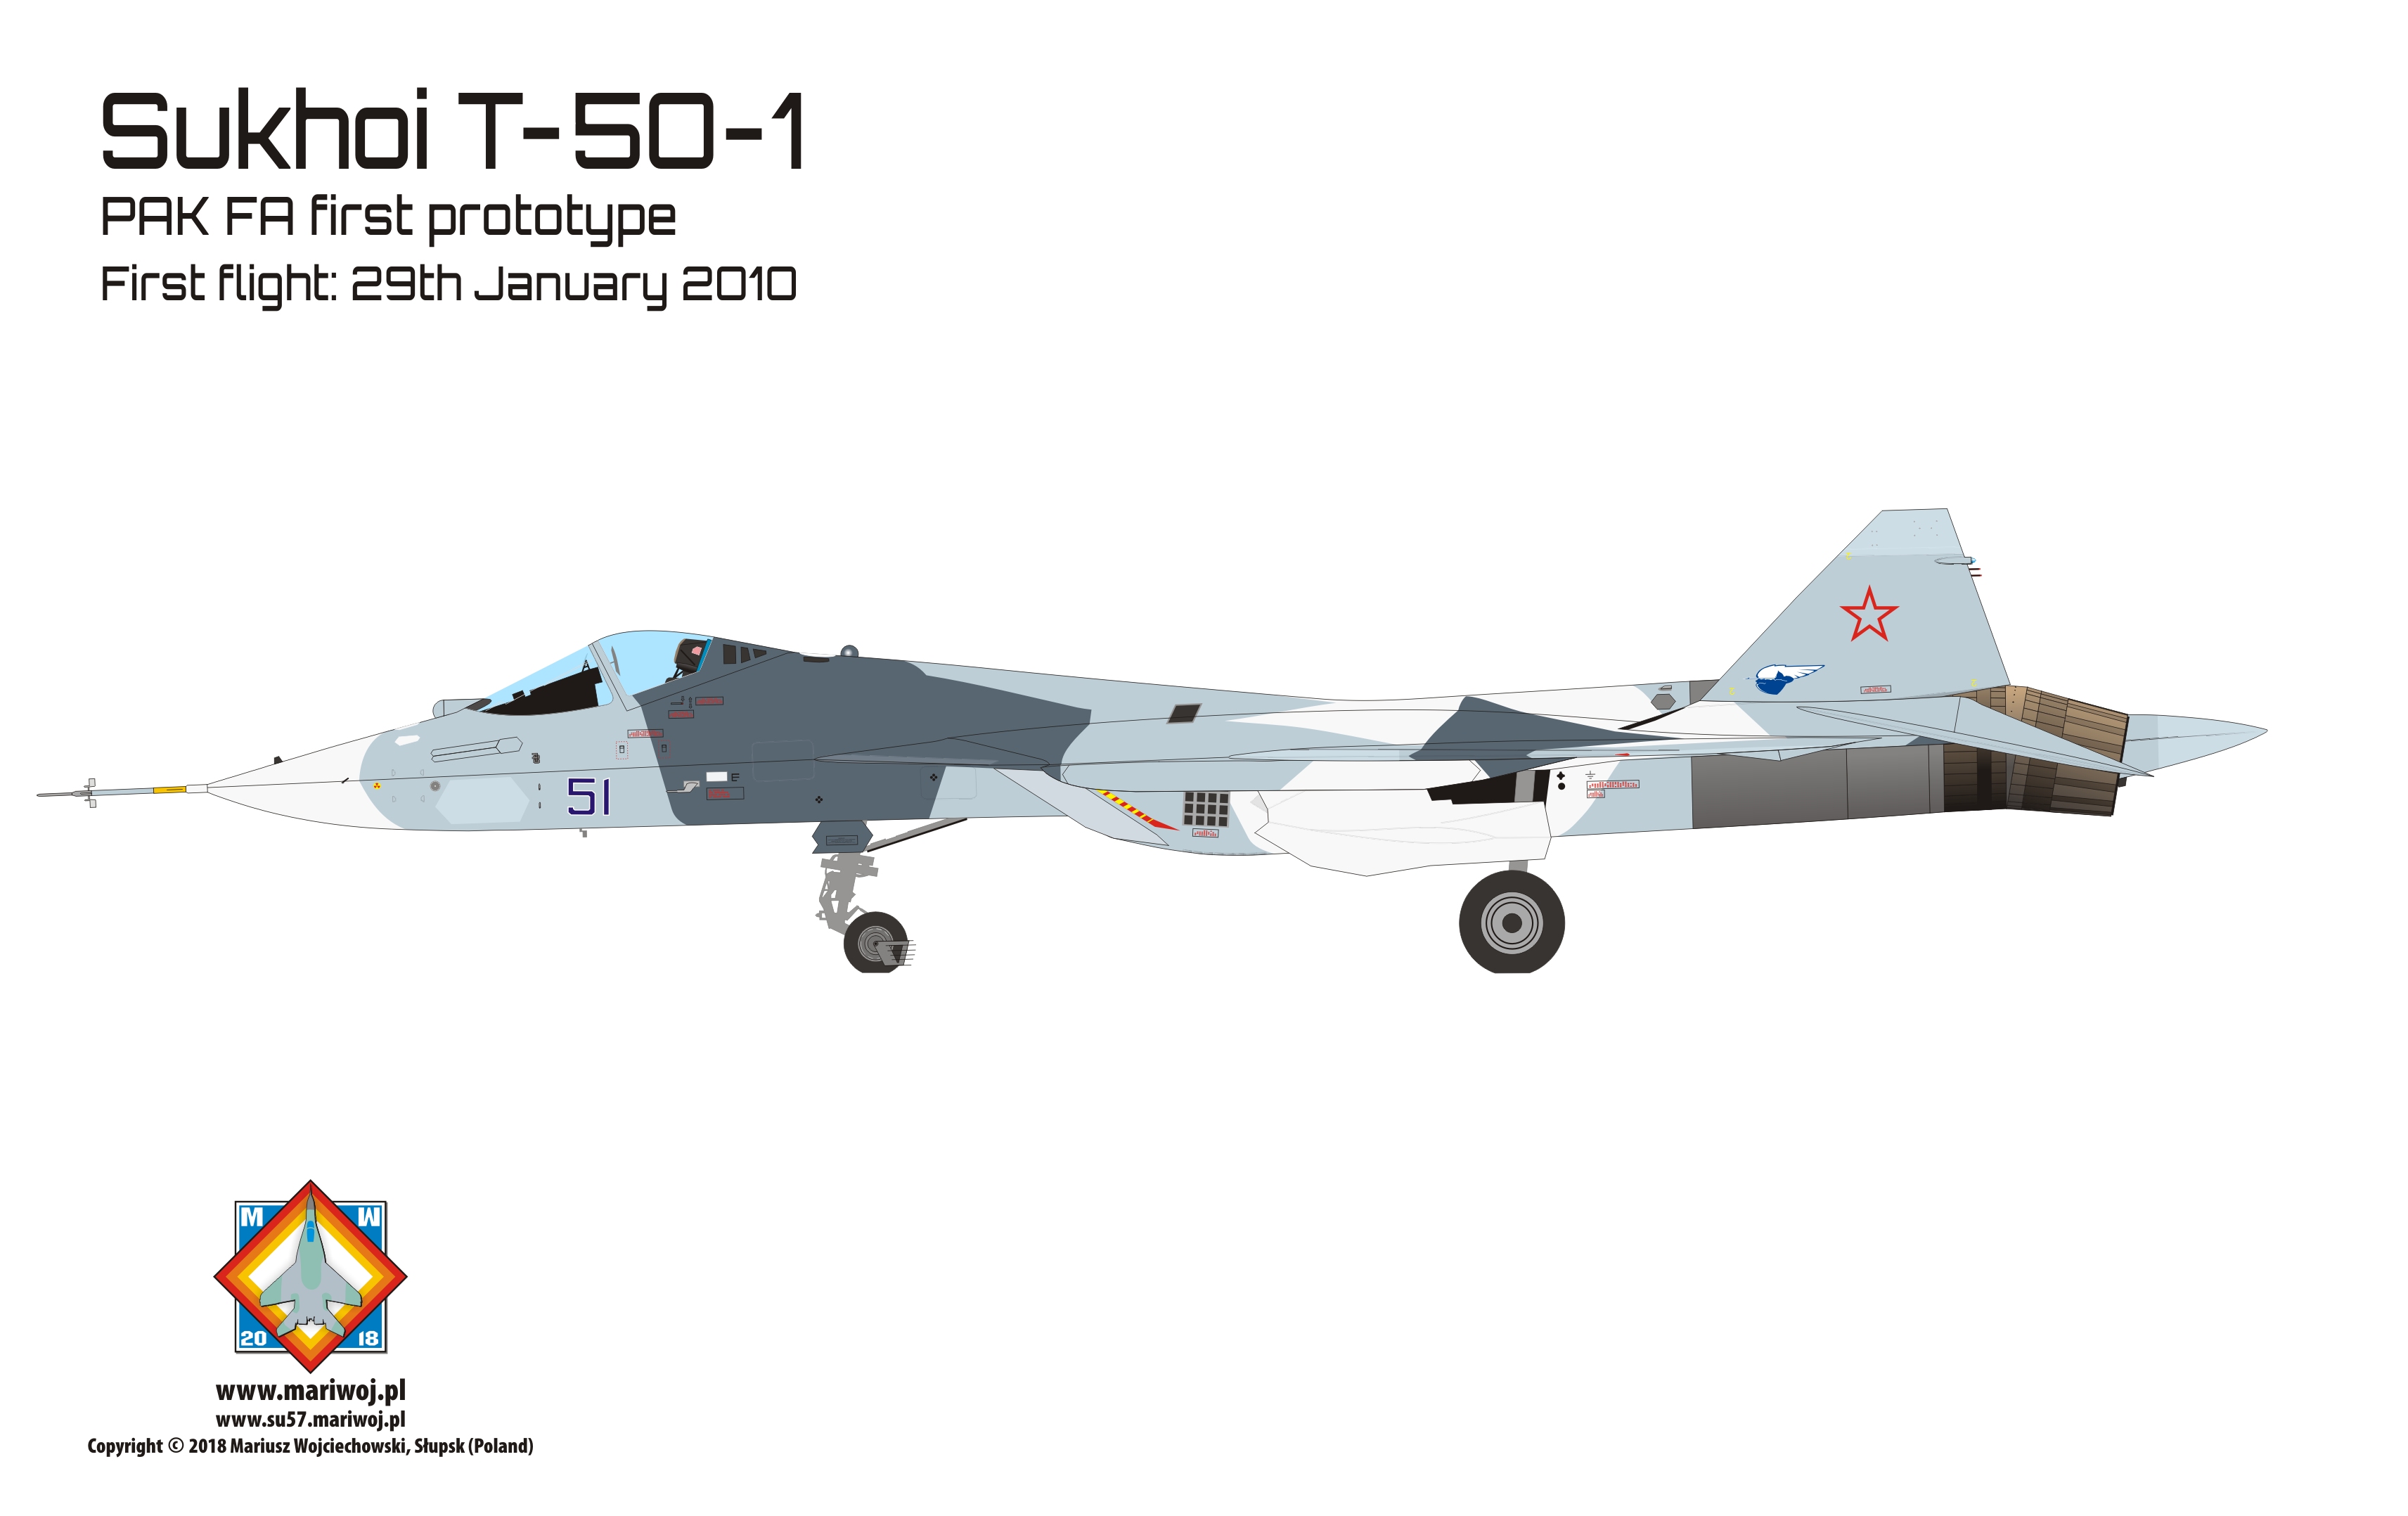 Sukhoi Su-57 PAK FA T-50-1 prototype